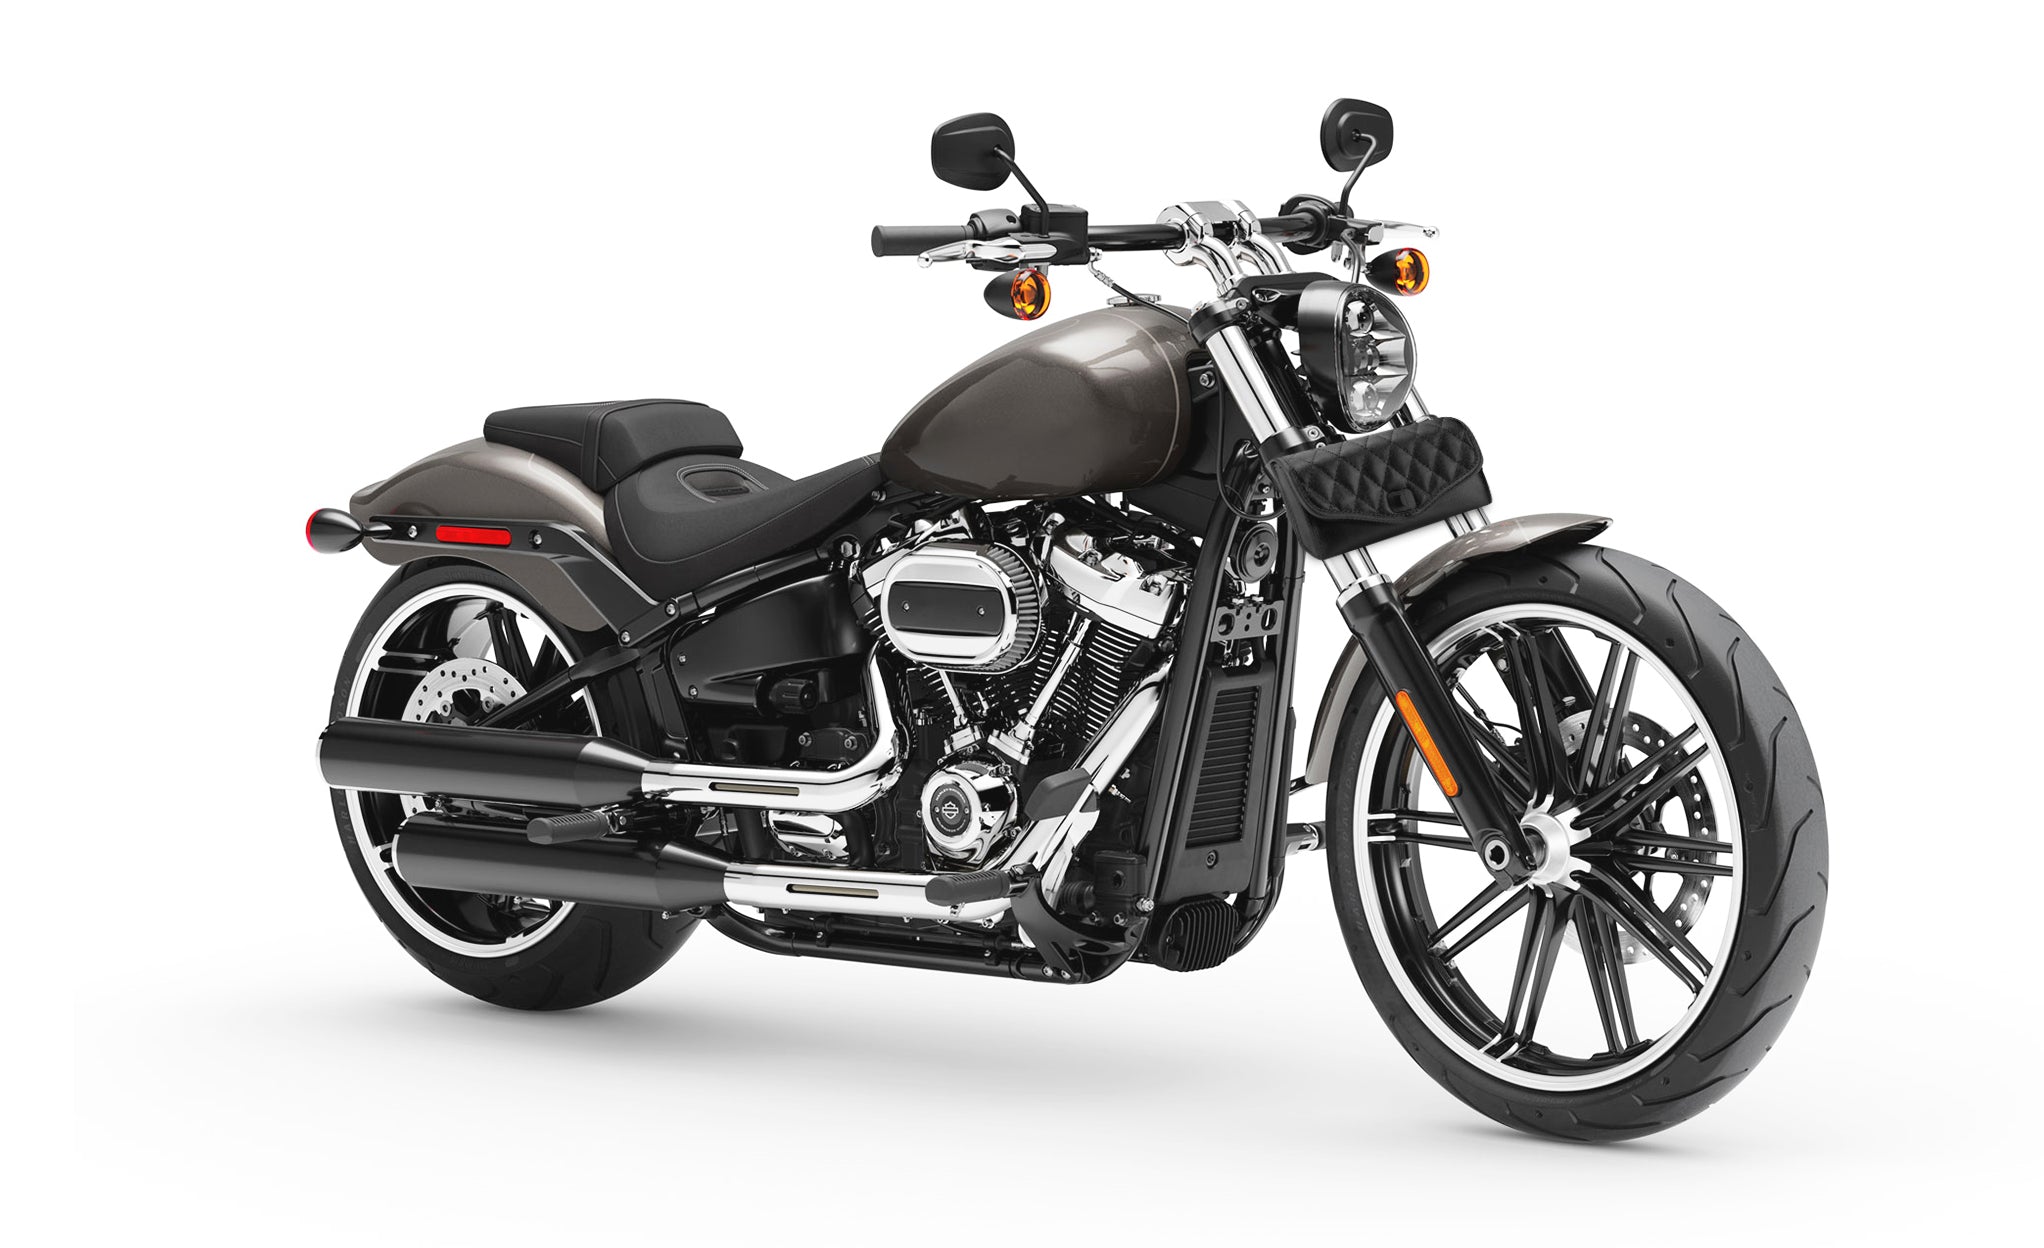 Viking Iron Born Diamond Stitch Leather Motorcycle Handlebar Bag for Harley Davidson Bag on Bike View @expand